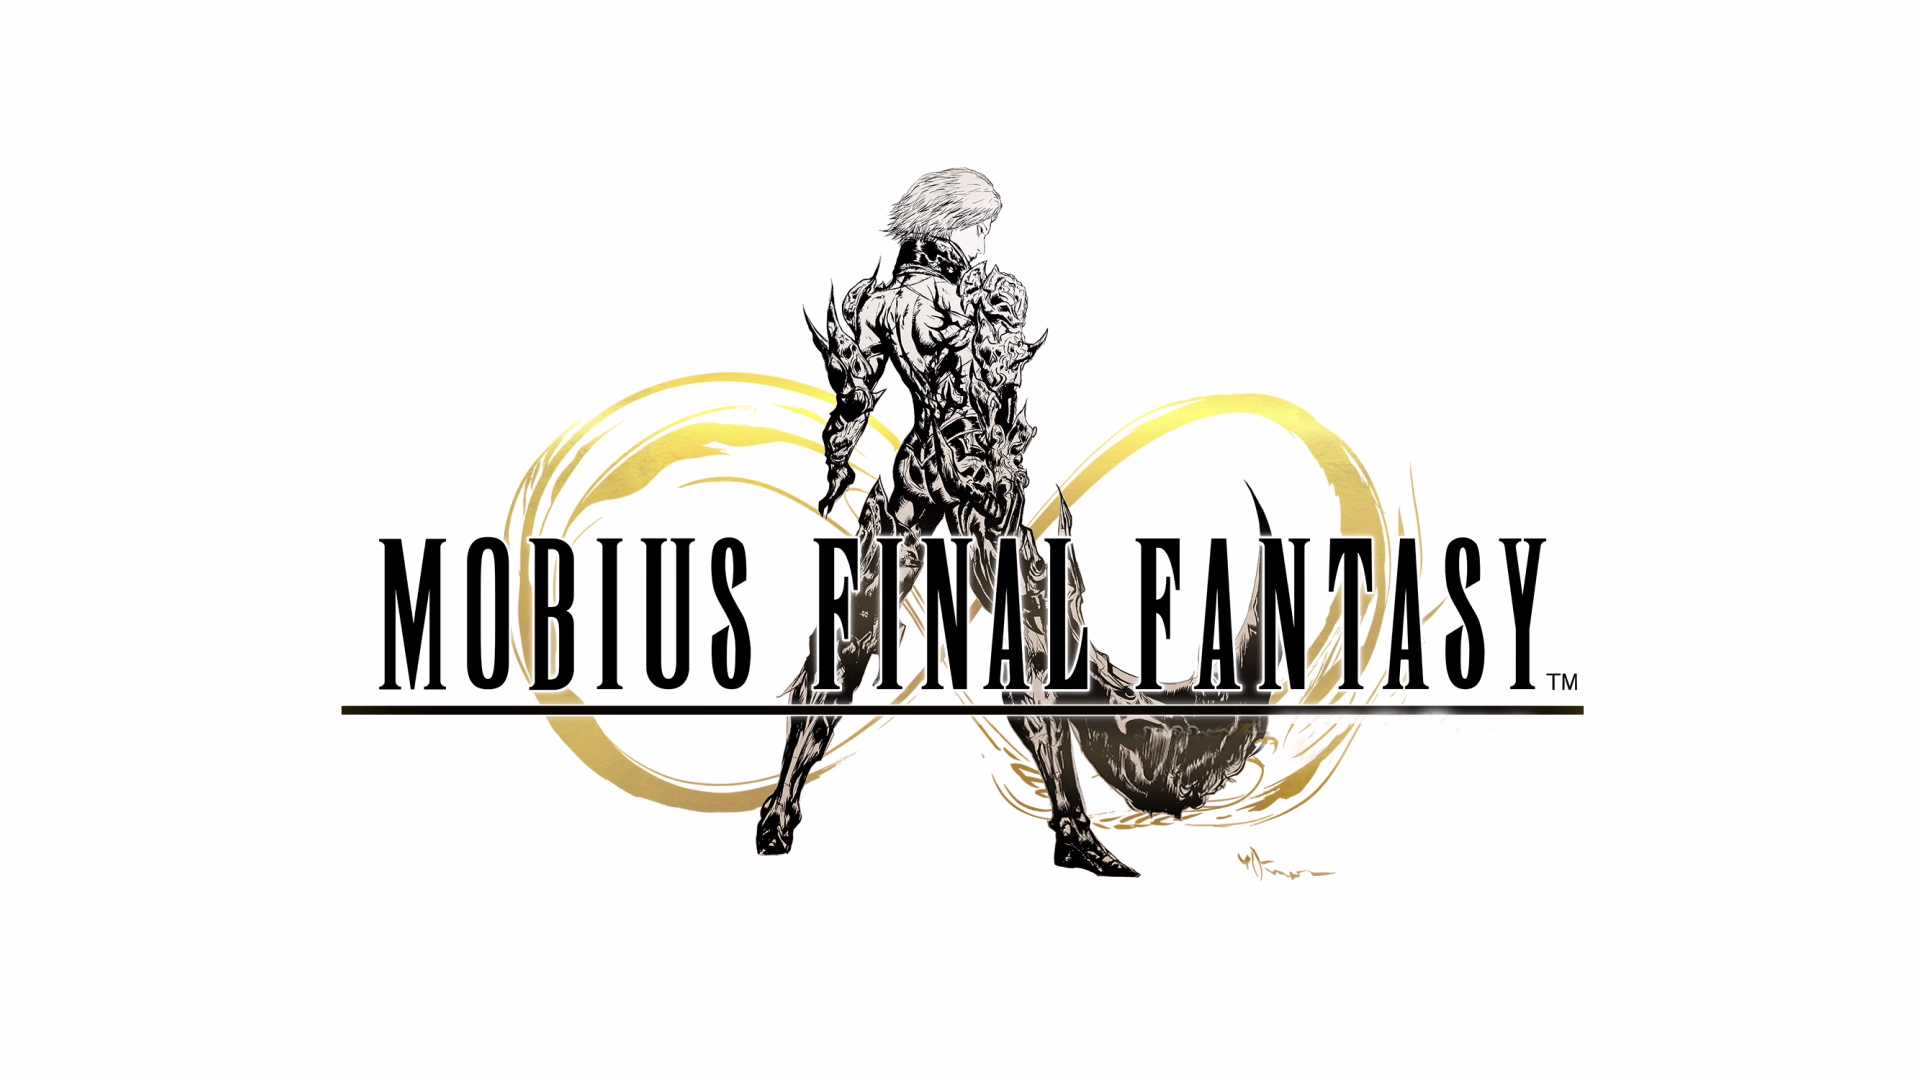 Mobius Final Fantasy arriva su PC a Febbraio